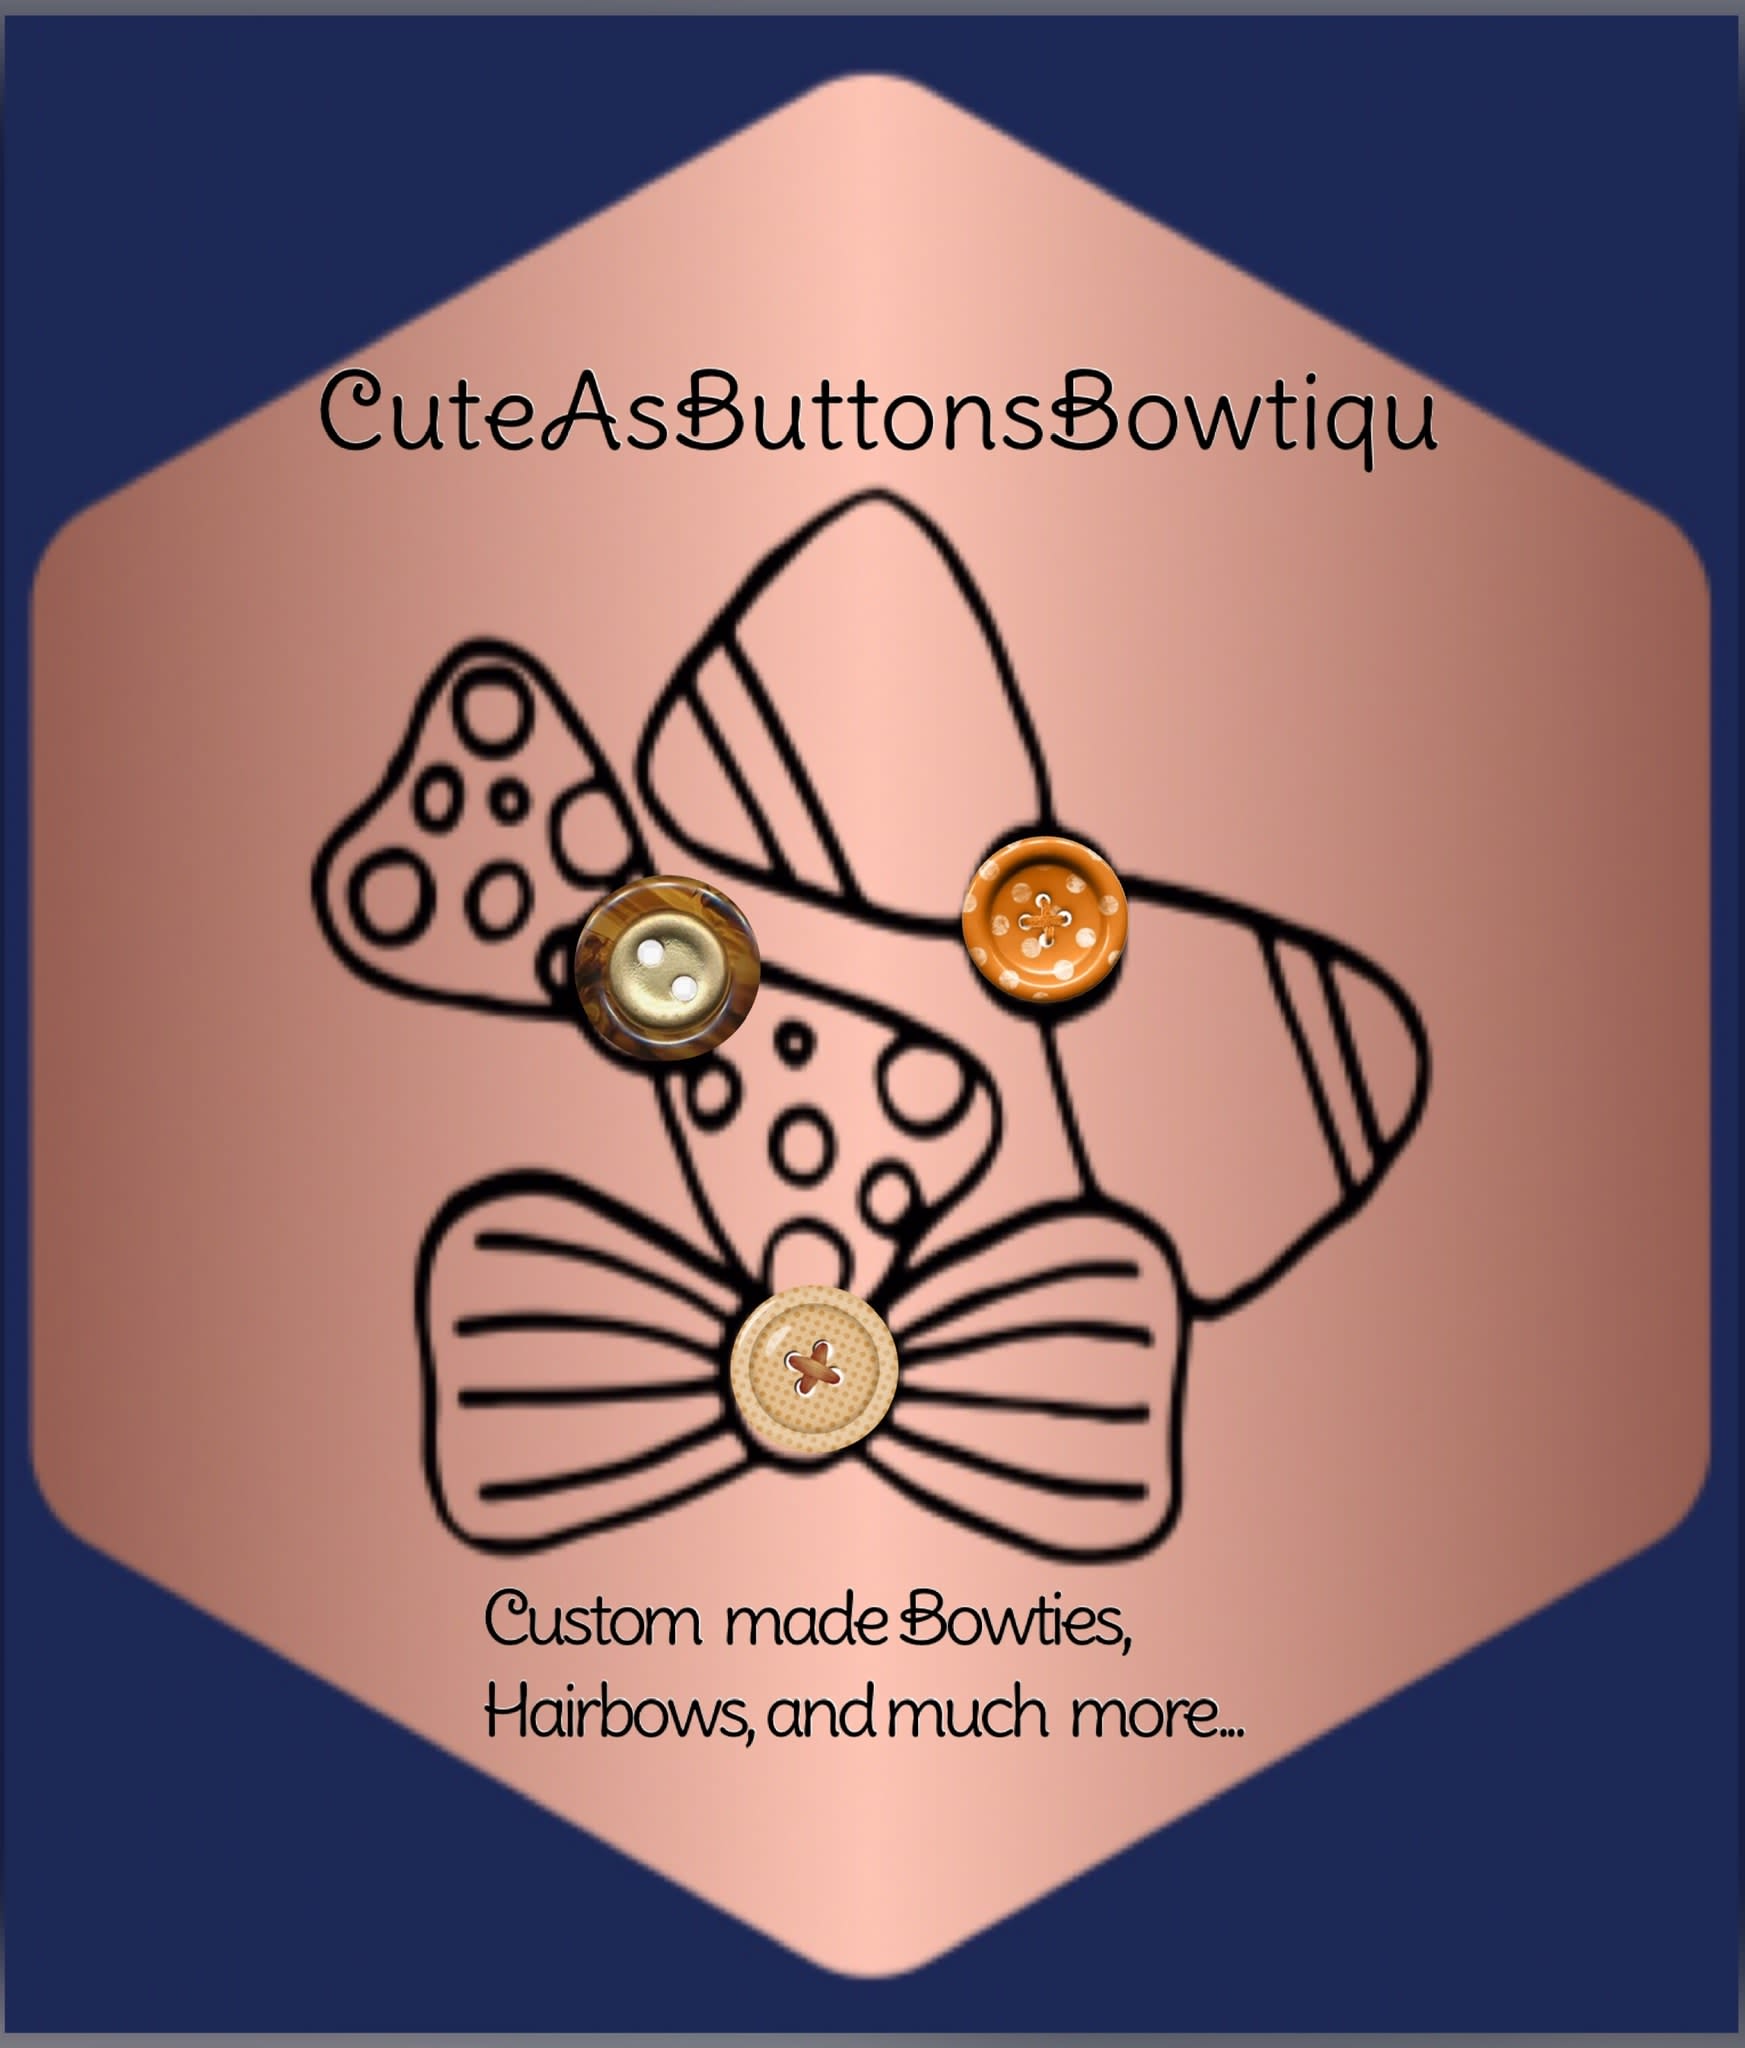 Cute As Buttons Bowtiqu